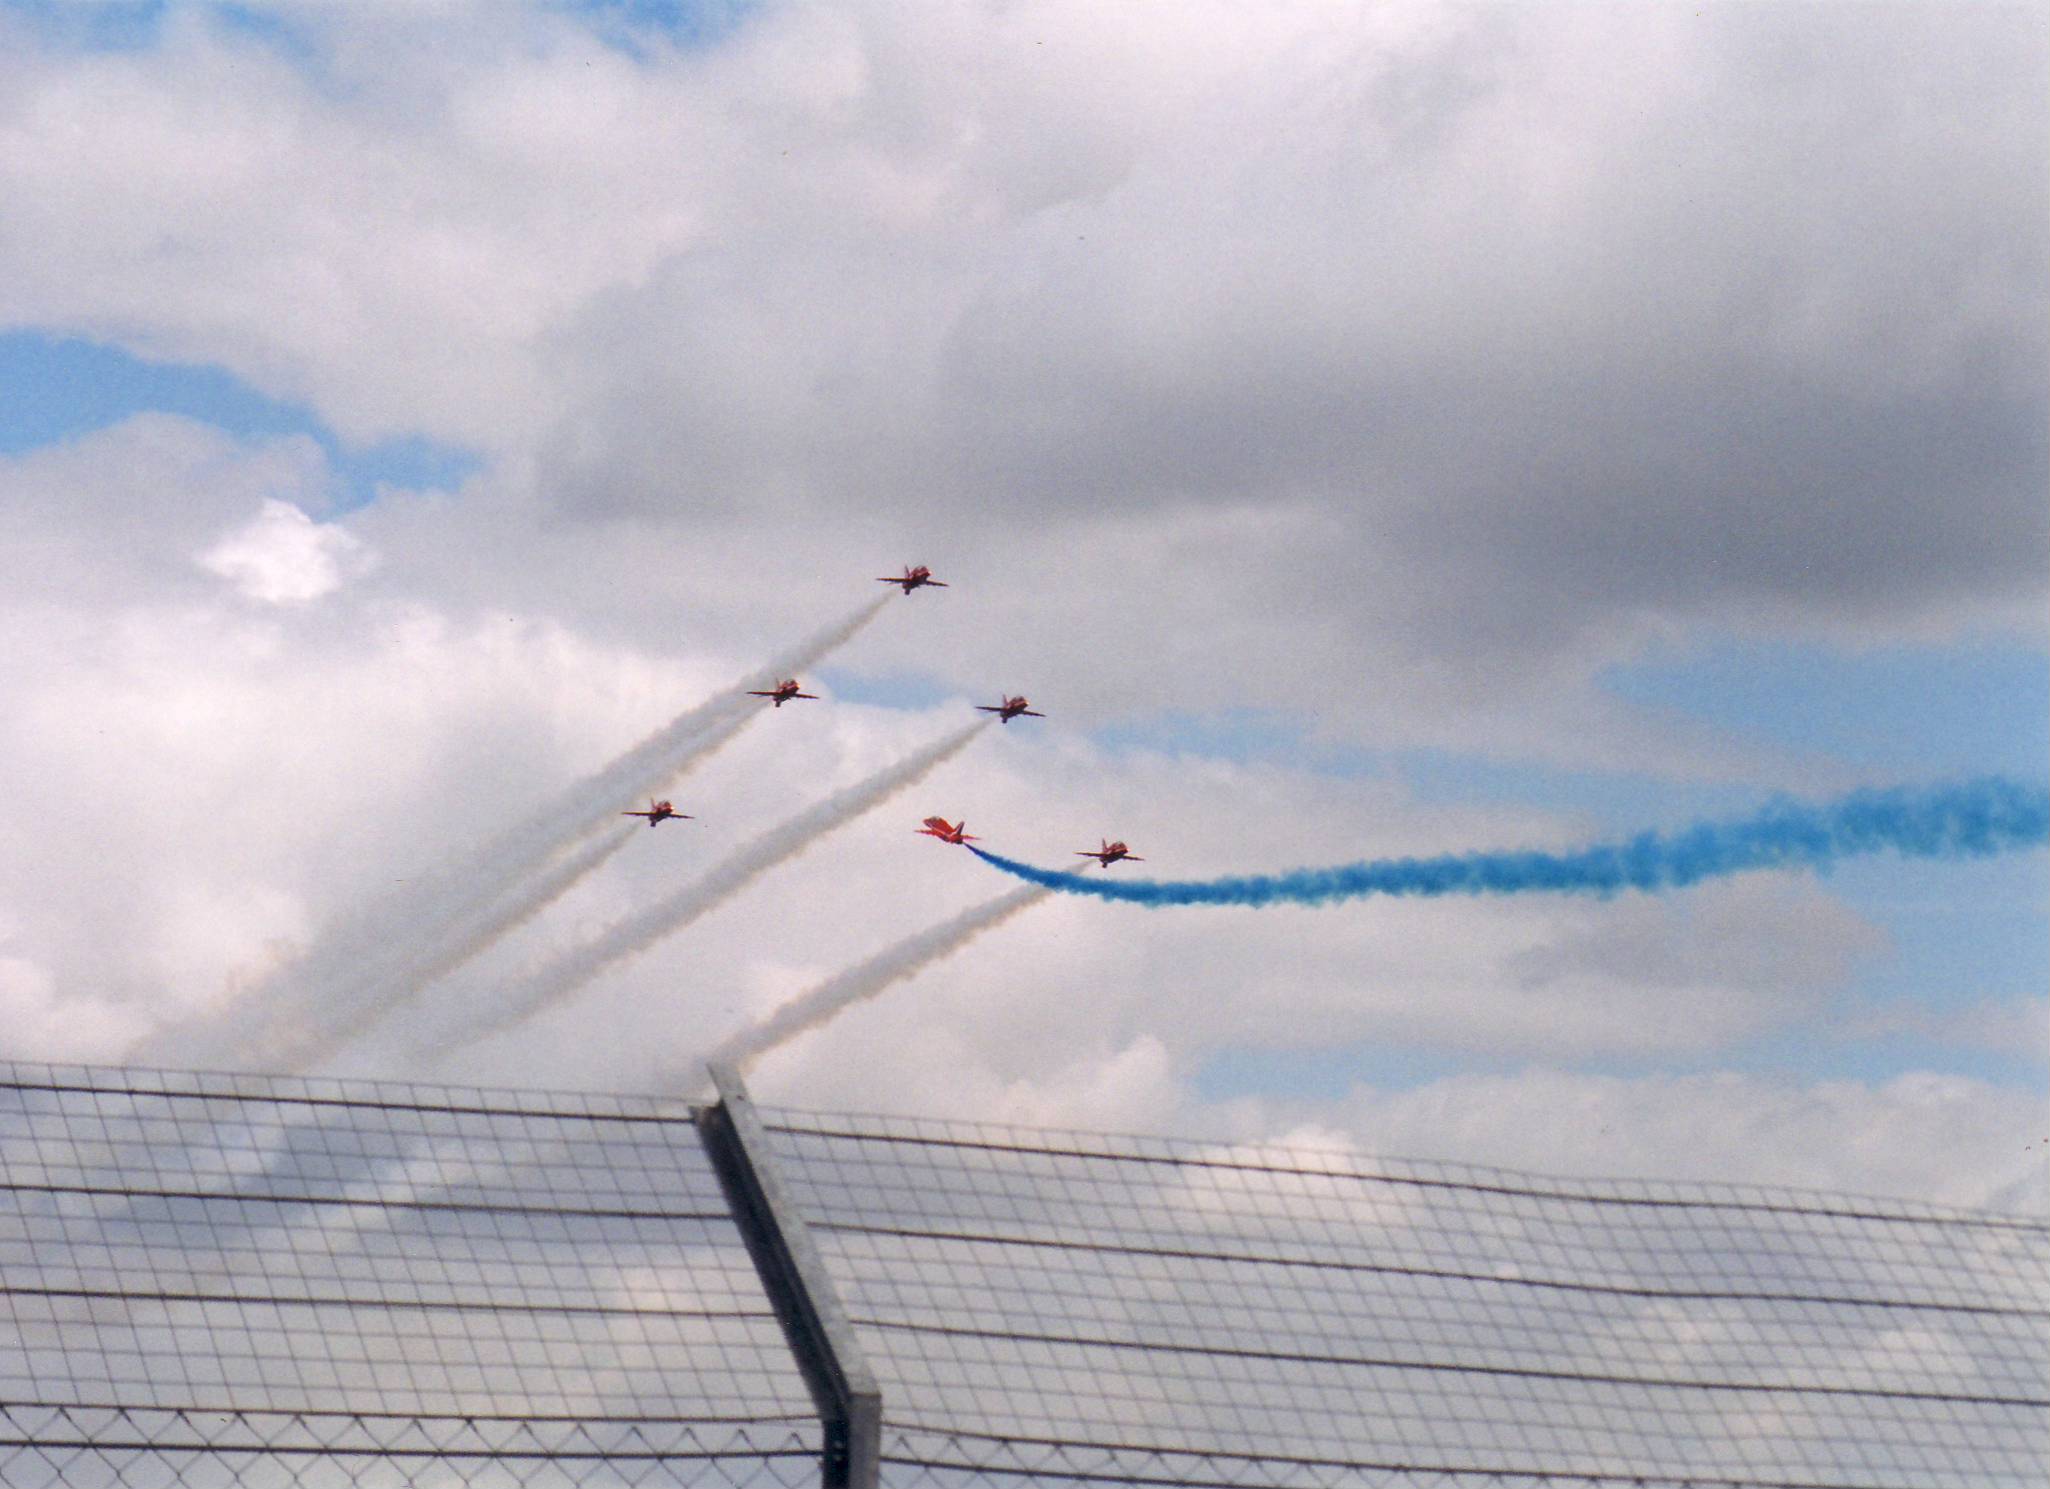 Red Arrows, Silverstone, F1 Grand Prix race day 2003?